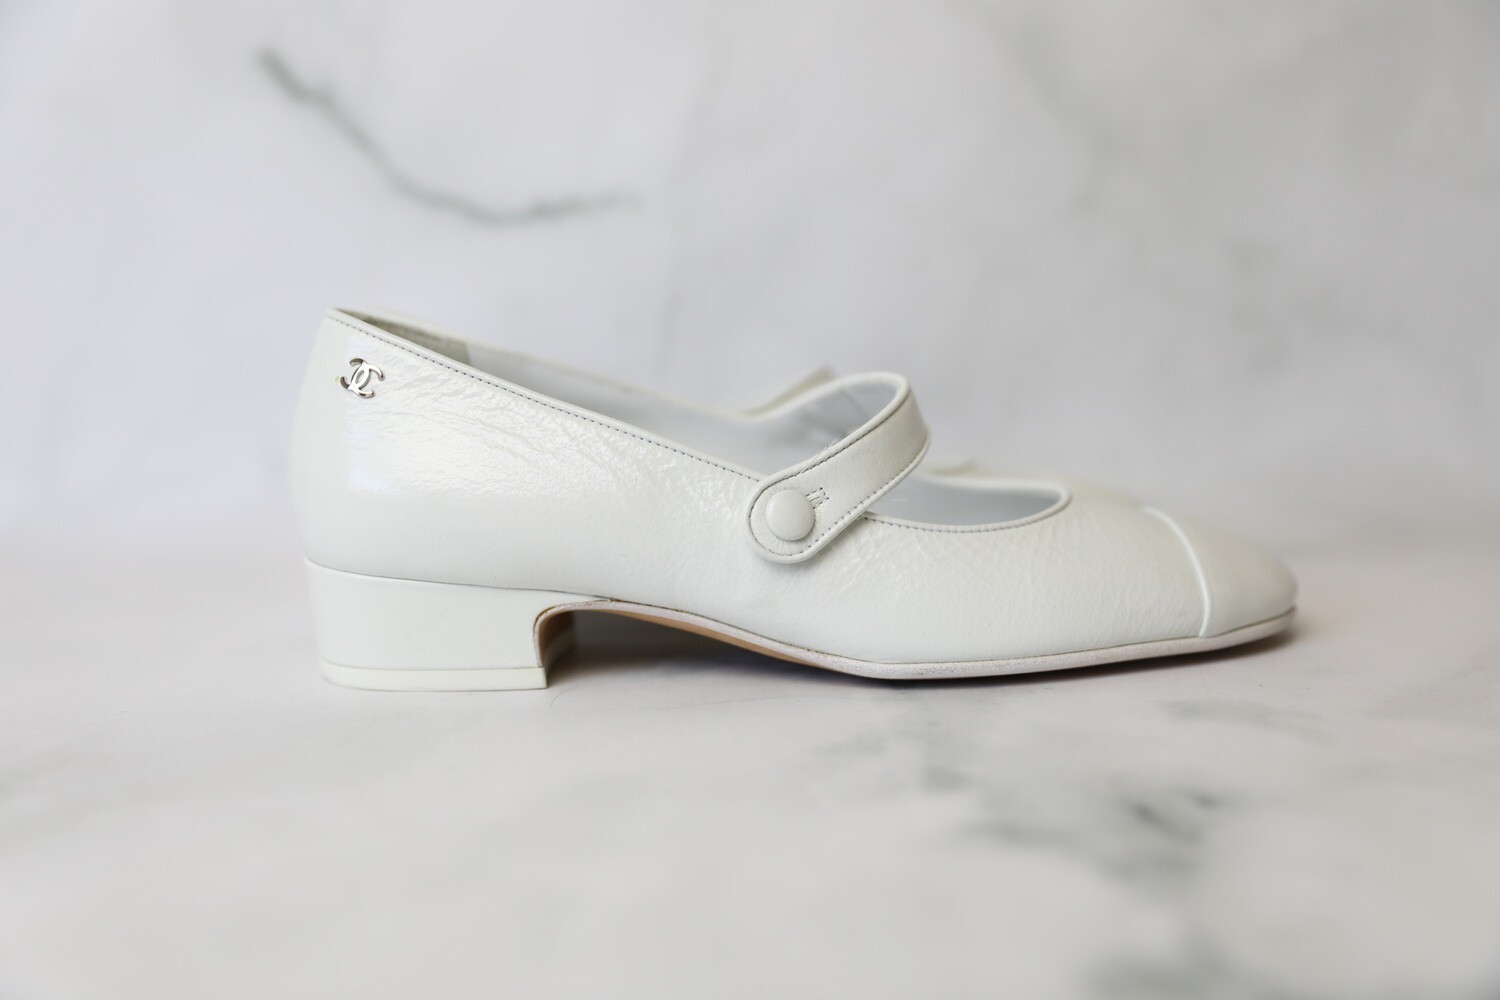 Chanel Mary Jane Pumps, White, Size 38.5, New in Box WA001